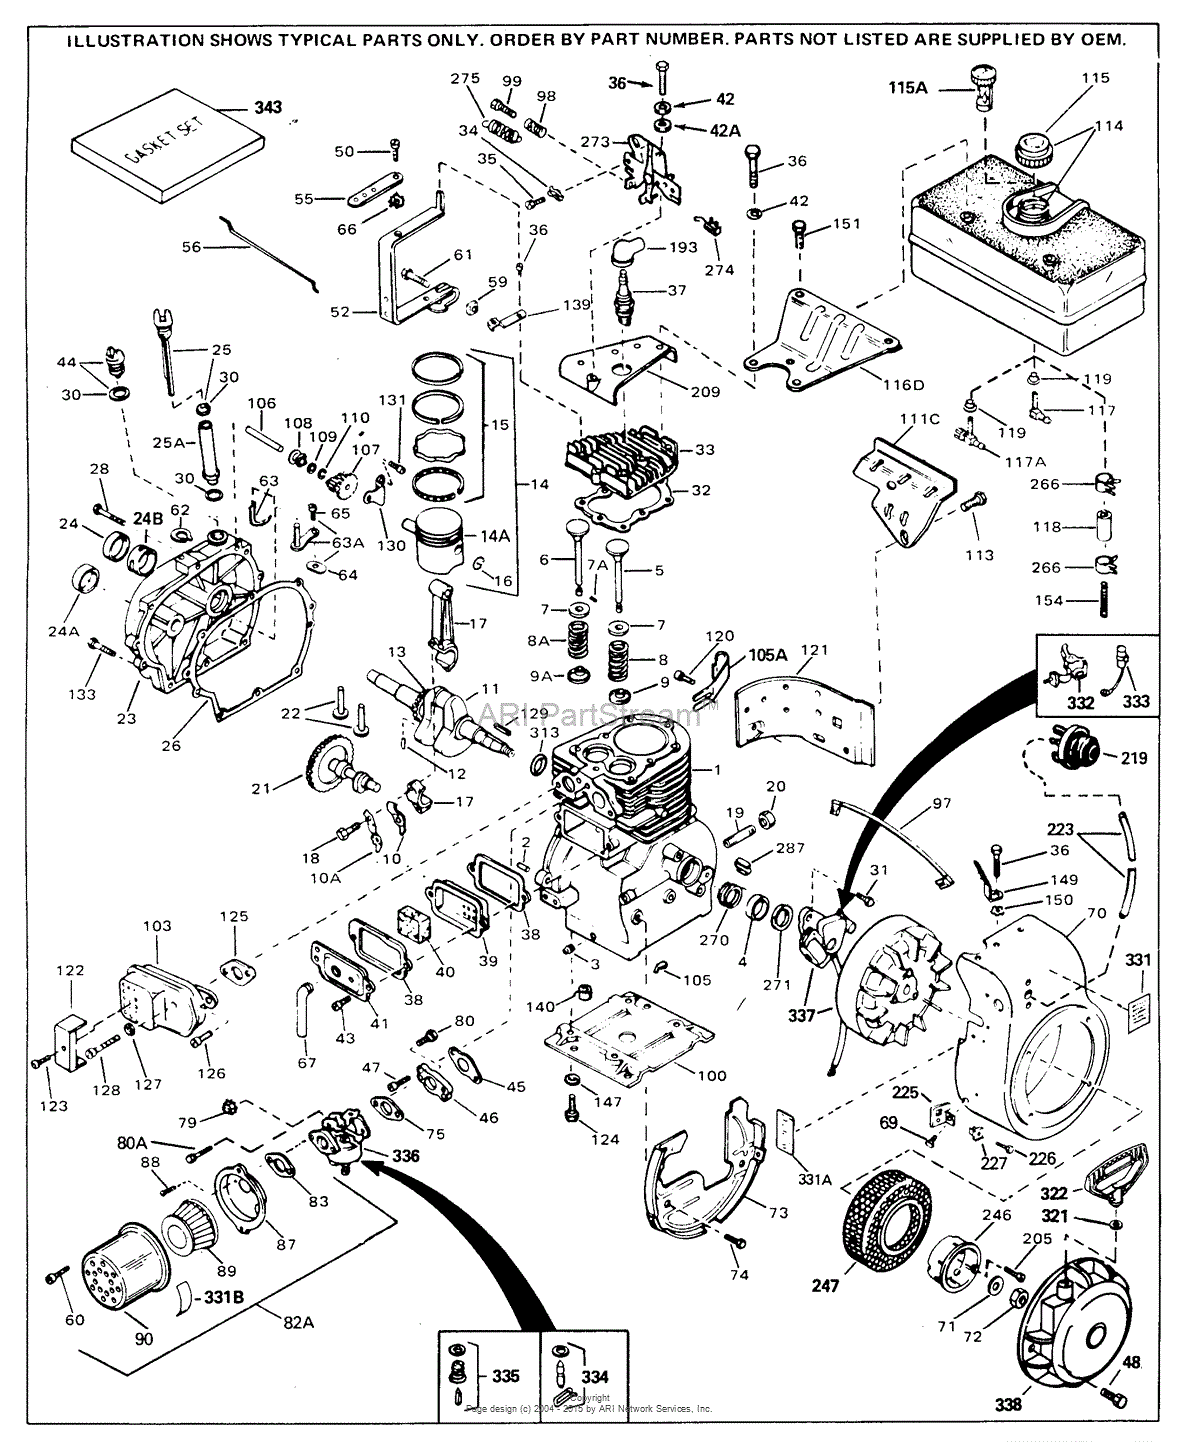 Tecumseh engine parts lookup